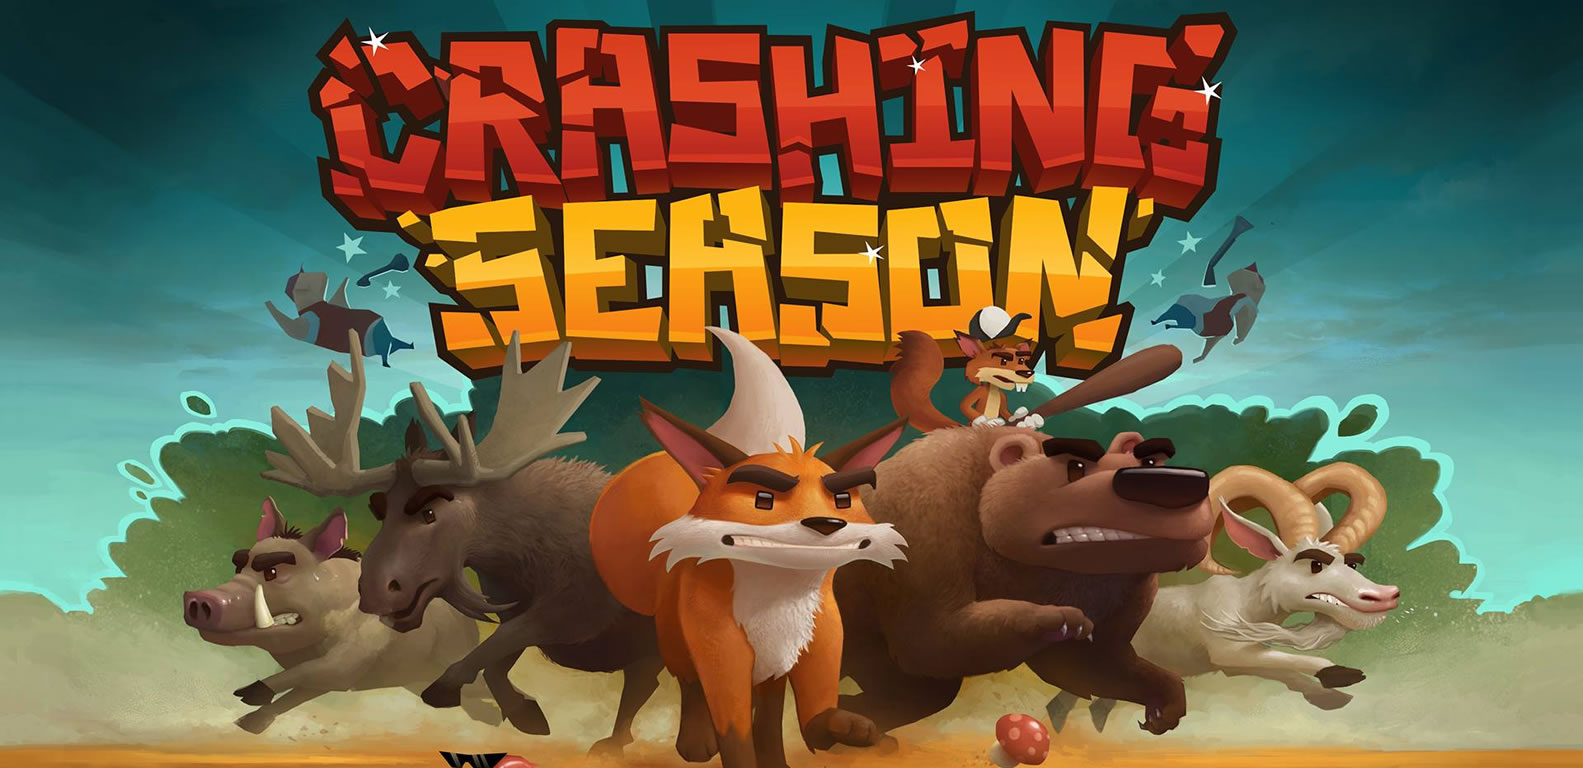 Crashing Season Review